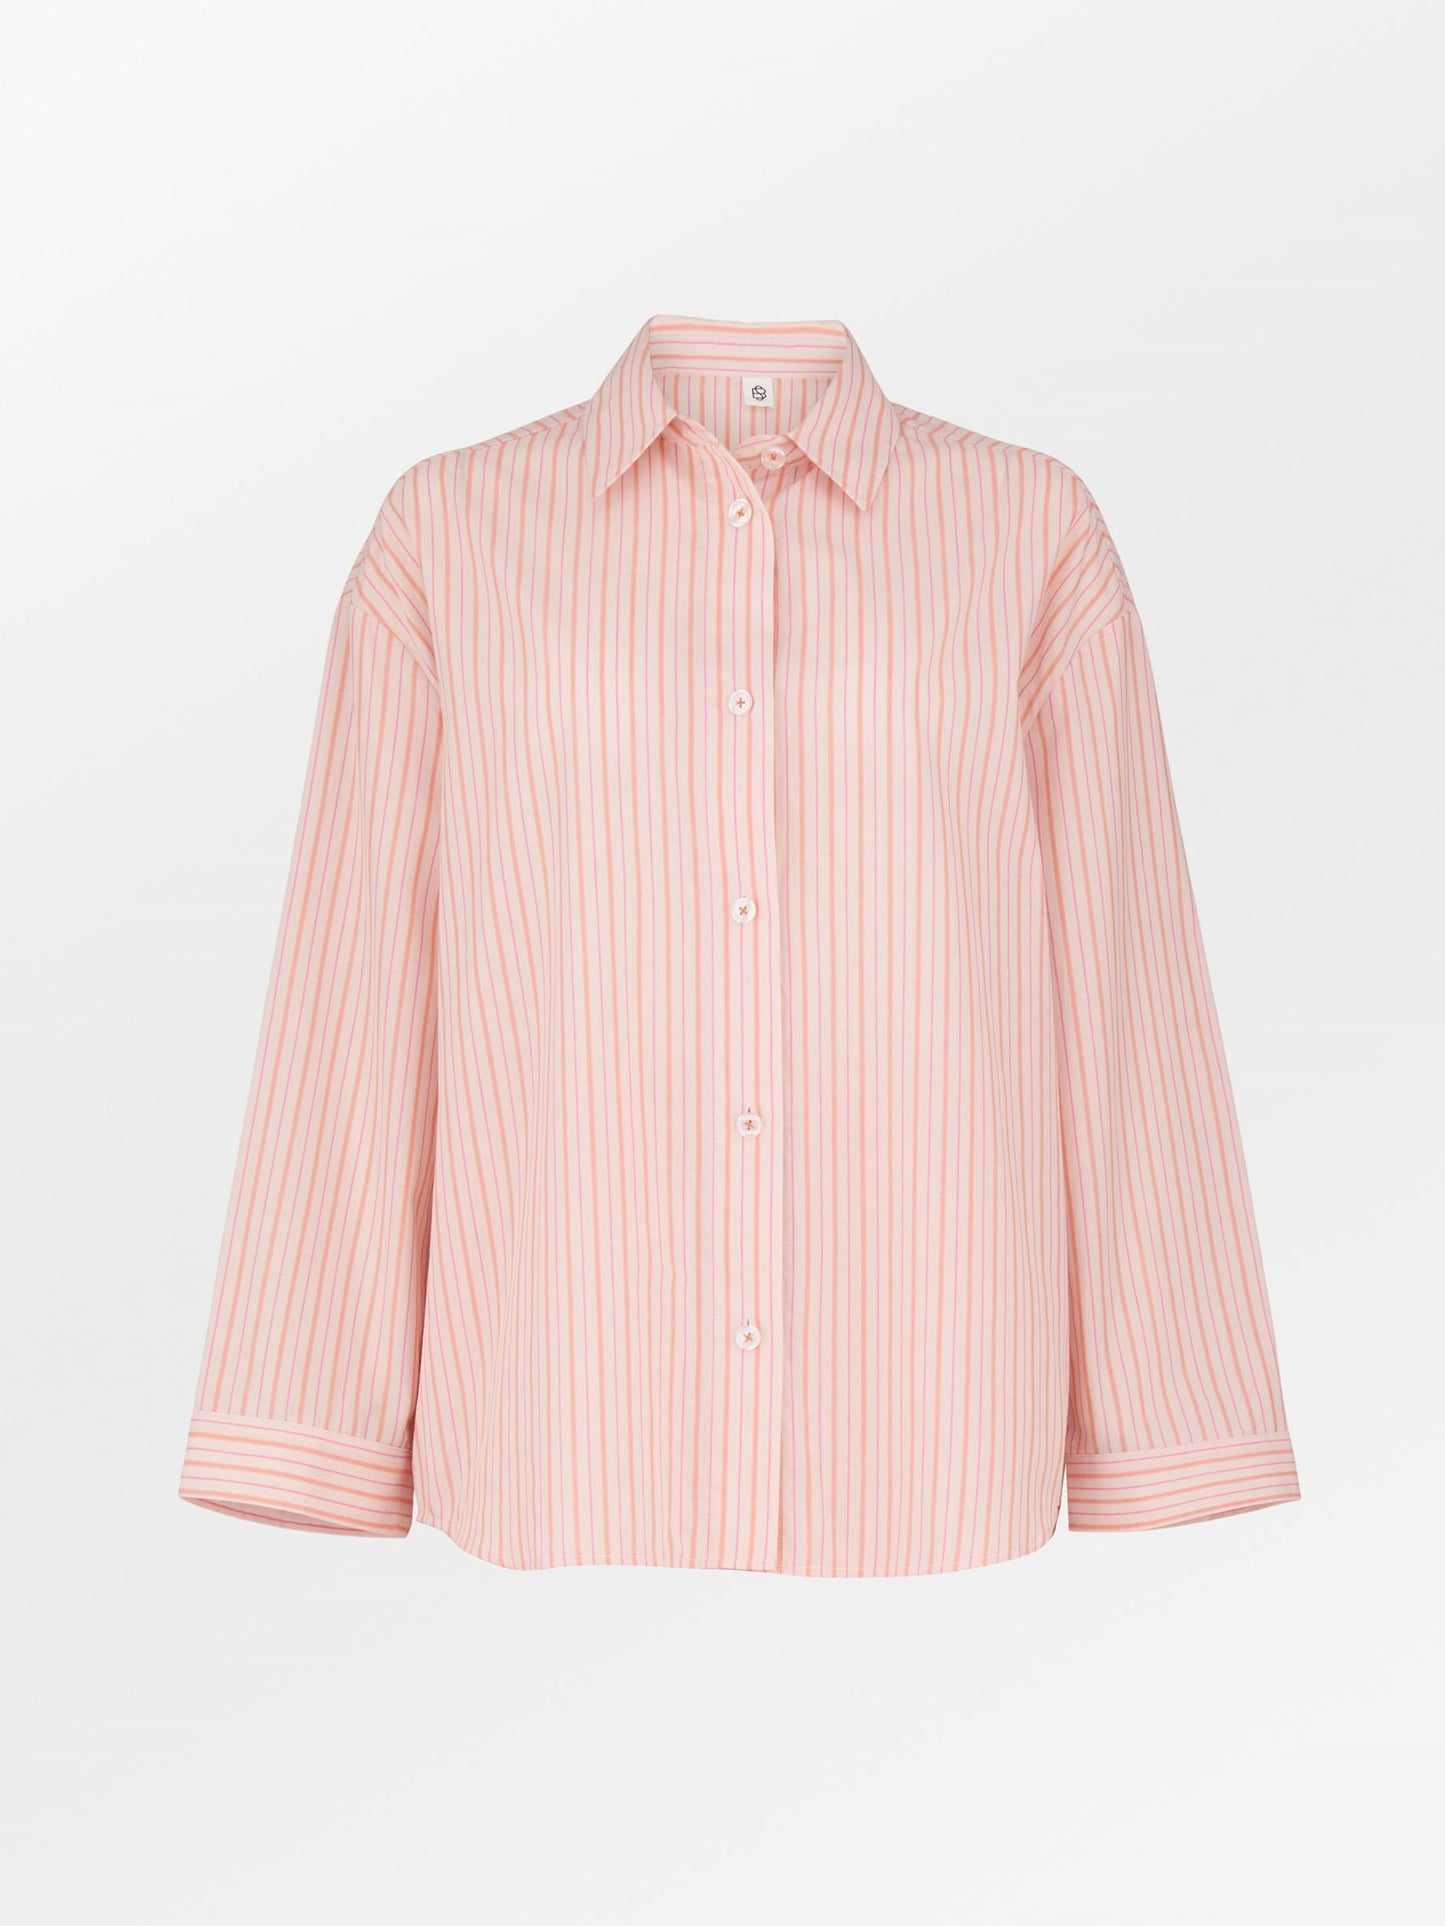 Stripel Pyjamas Set - Pink  Clothing Becksöndergaard.se